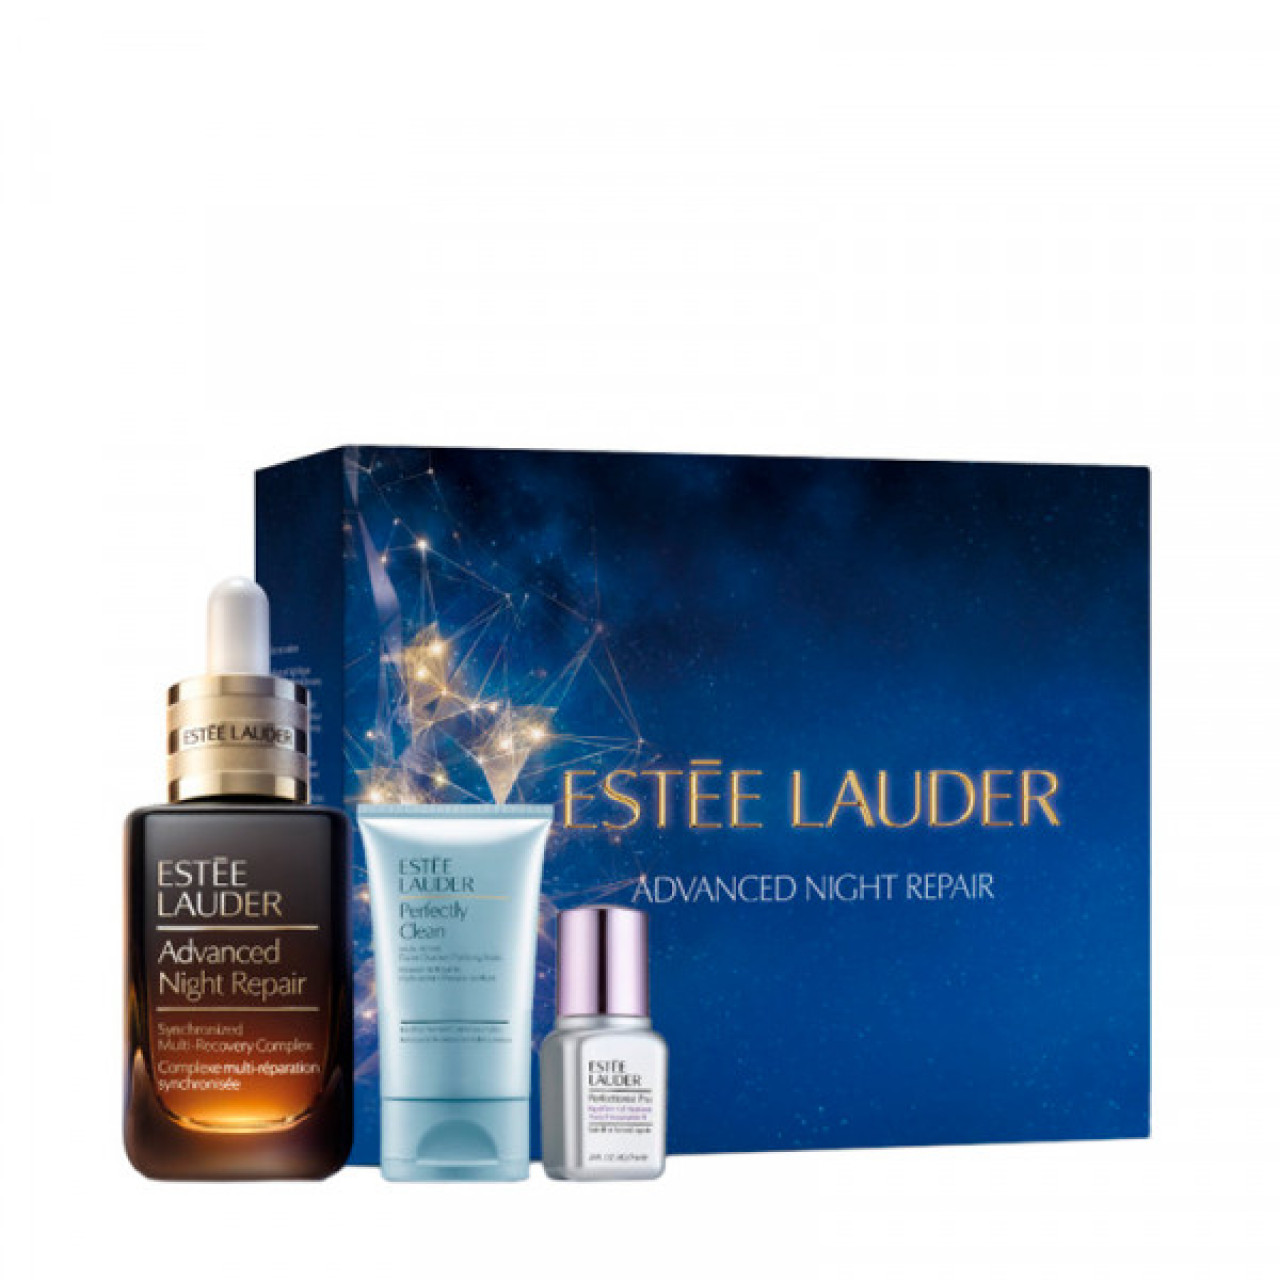 Estee Lauder advanced night serum 50ml+ perfectionist 7ml + cleanser 30ml